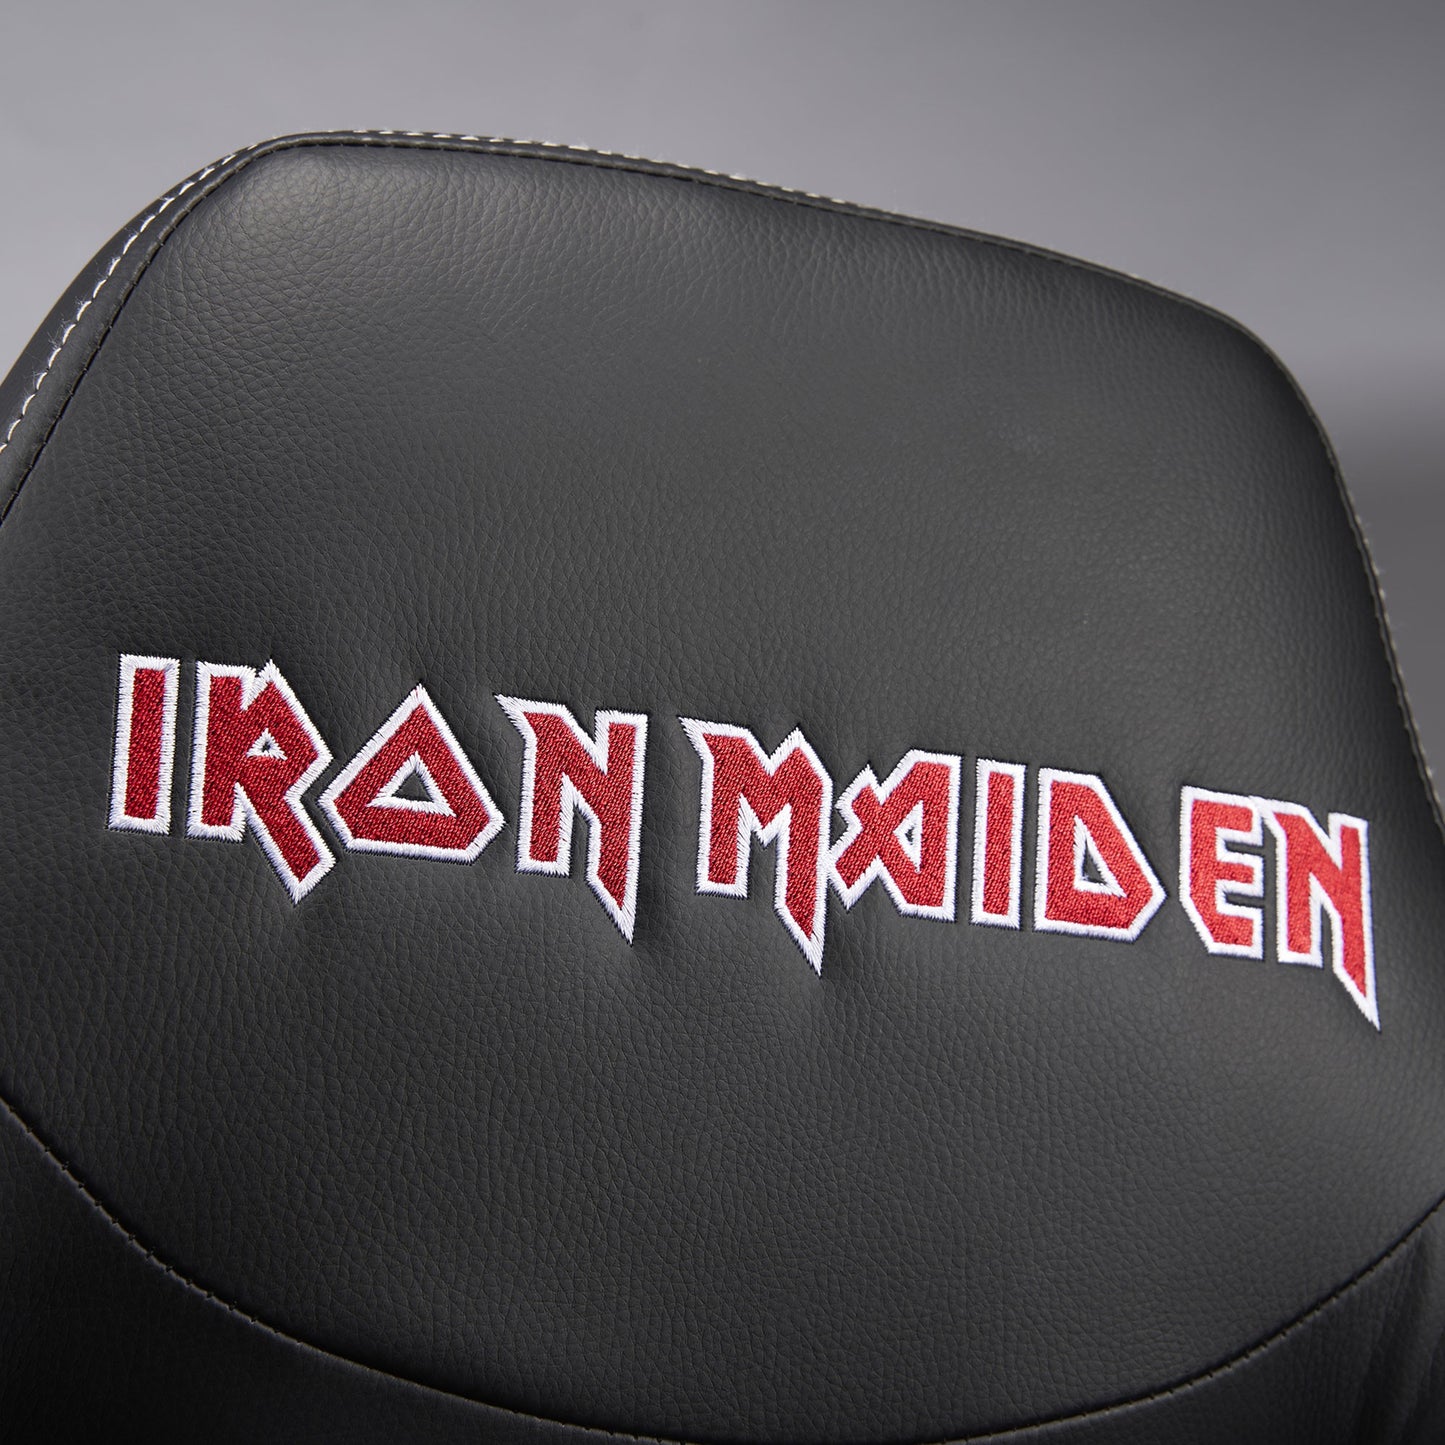 Subsonic Gaming Seat Iron Maiden